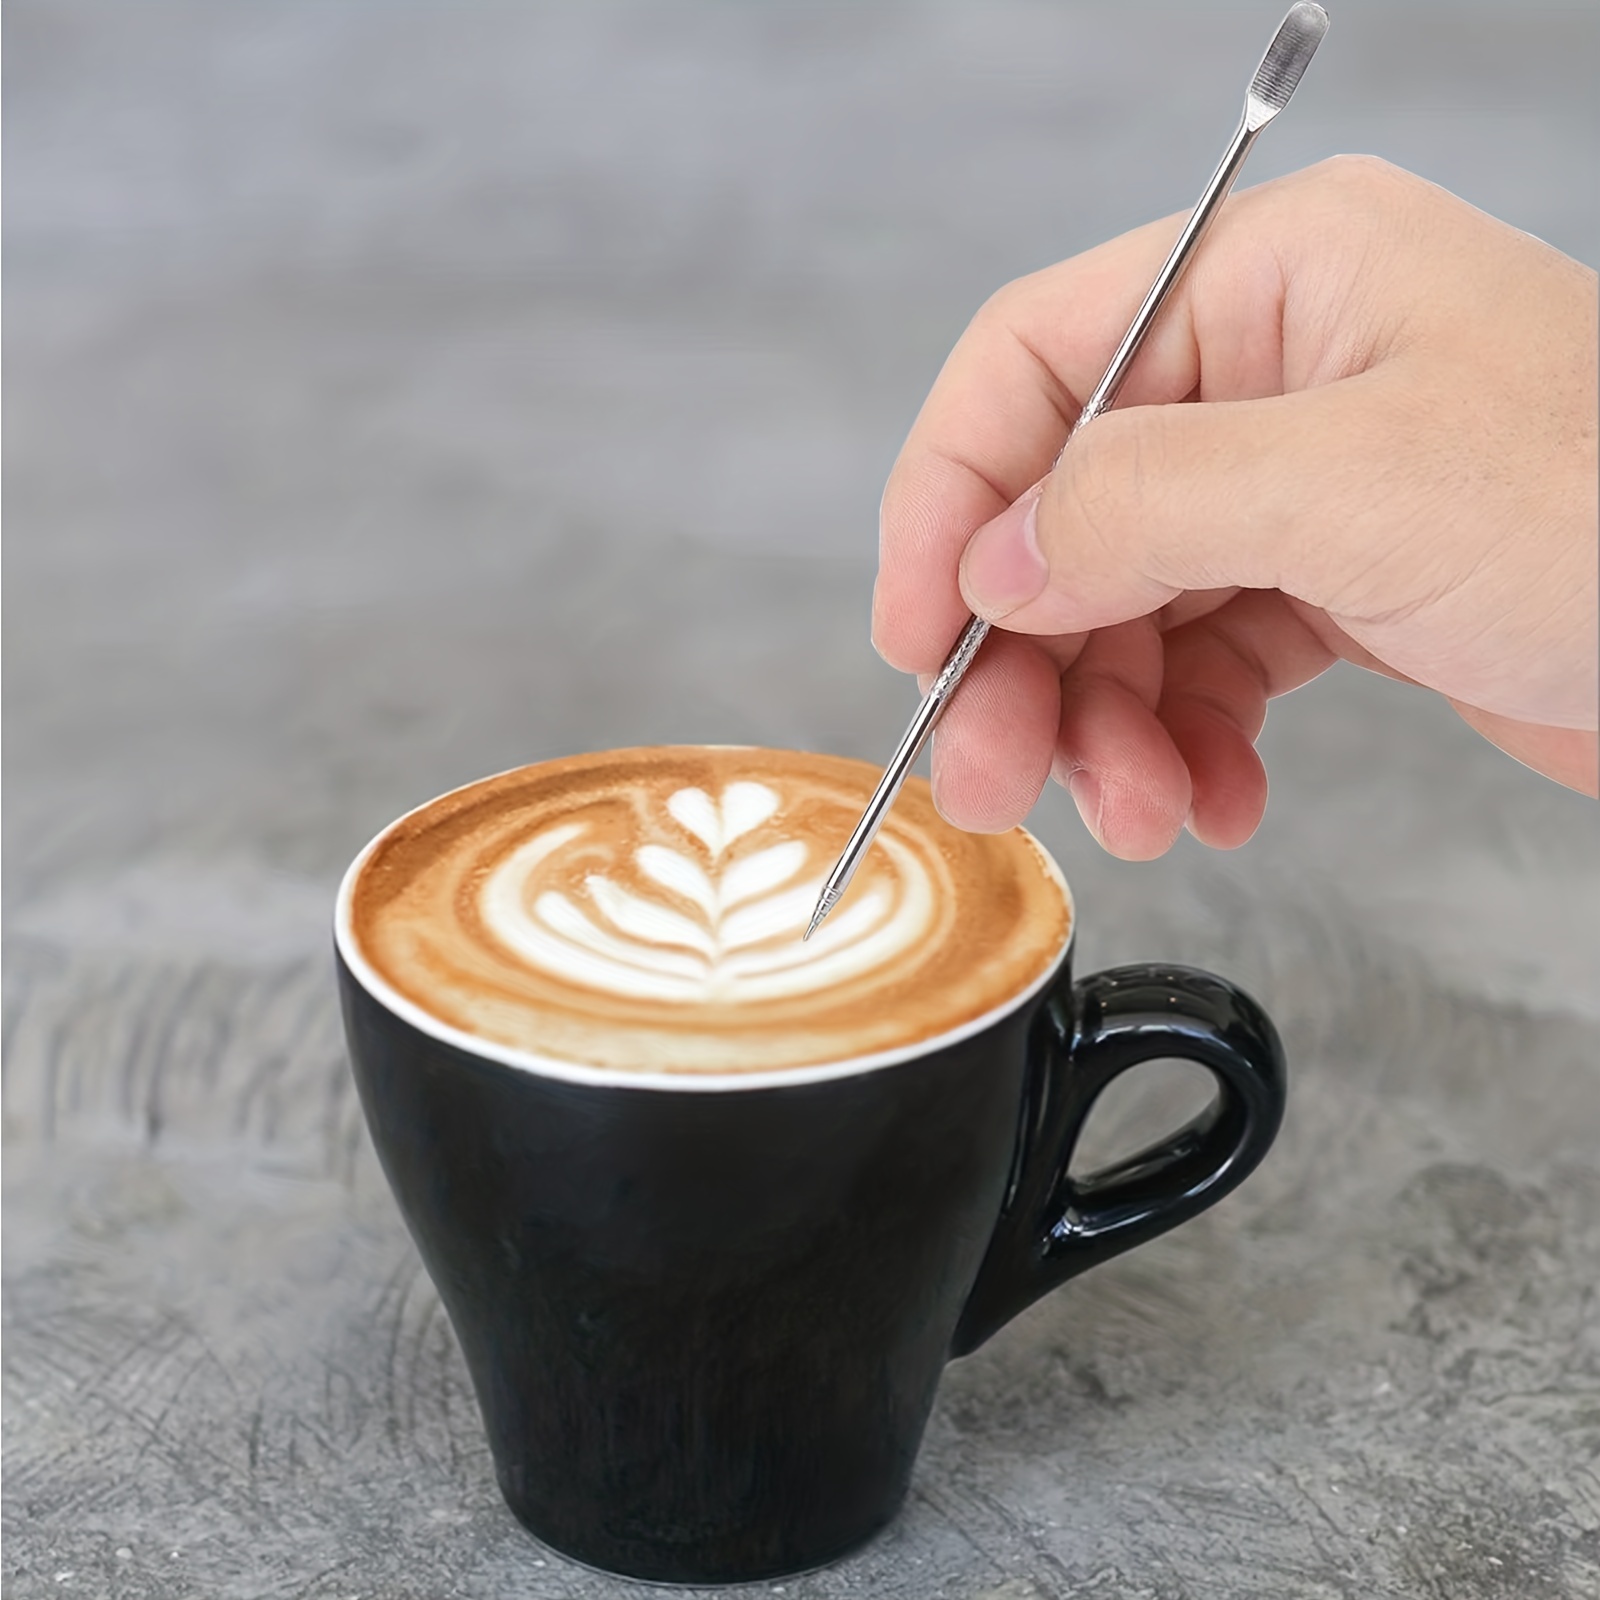  Latte Art Pen, White Spice Pen Electric Coffee Pen for